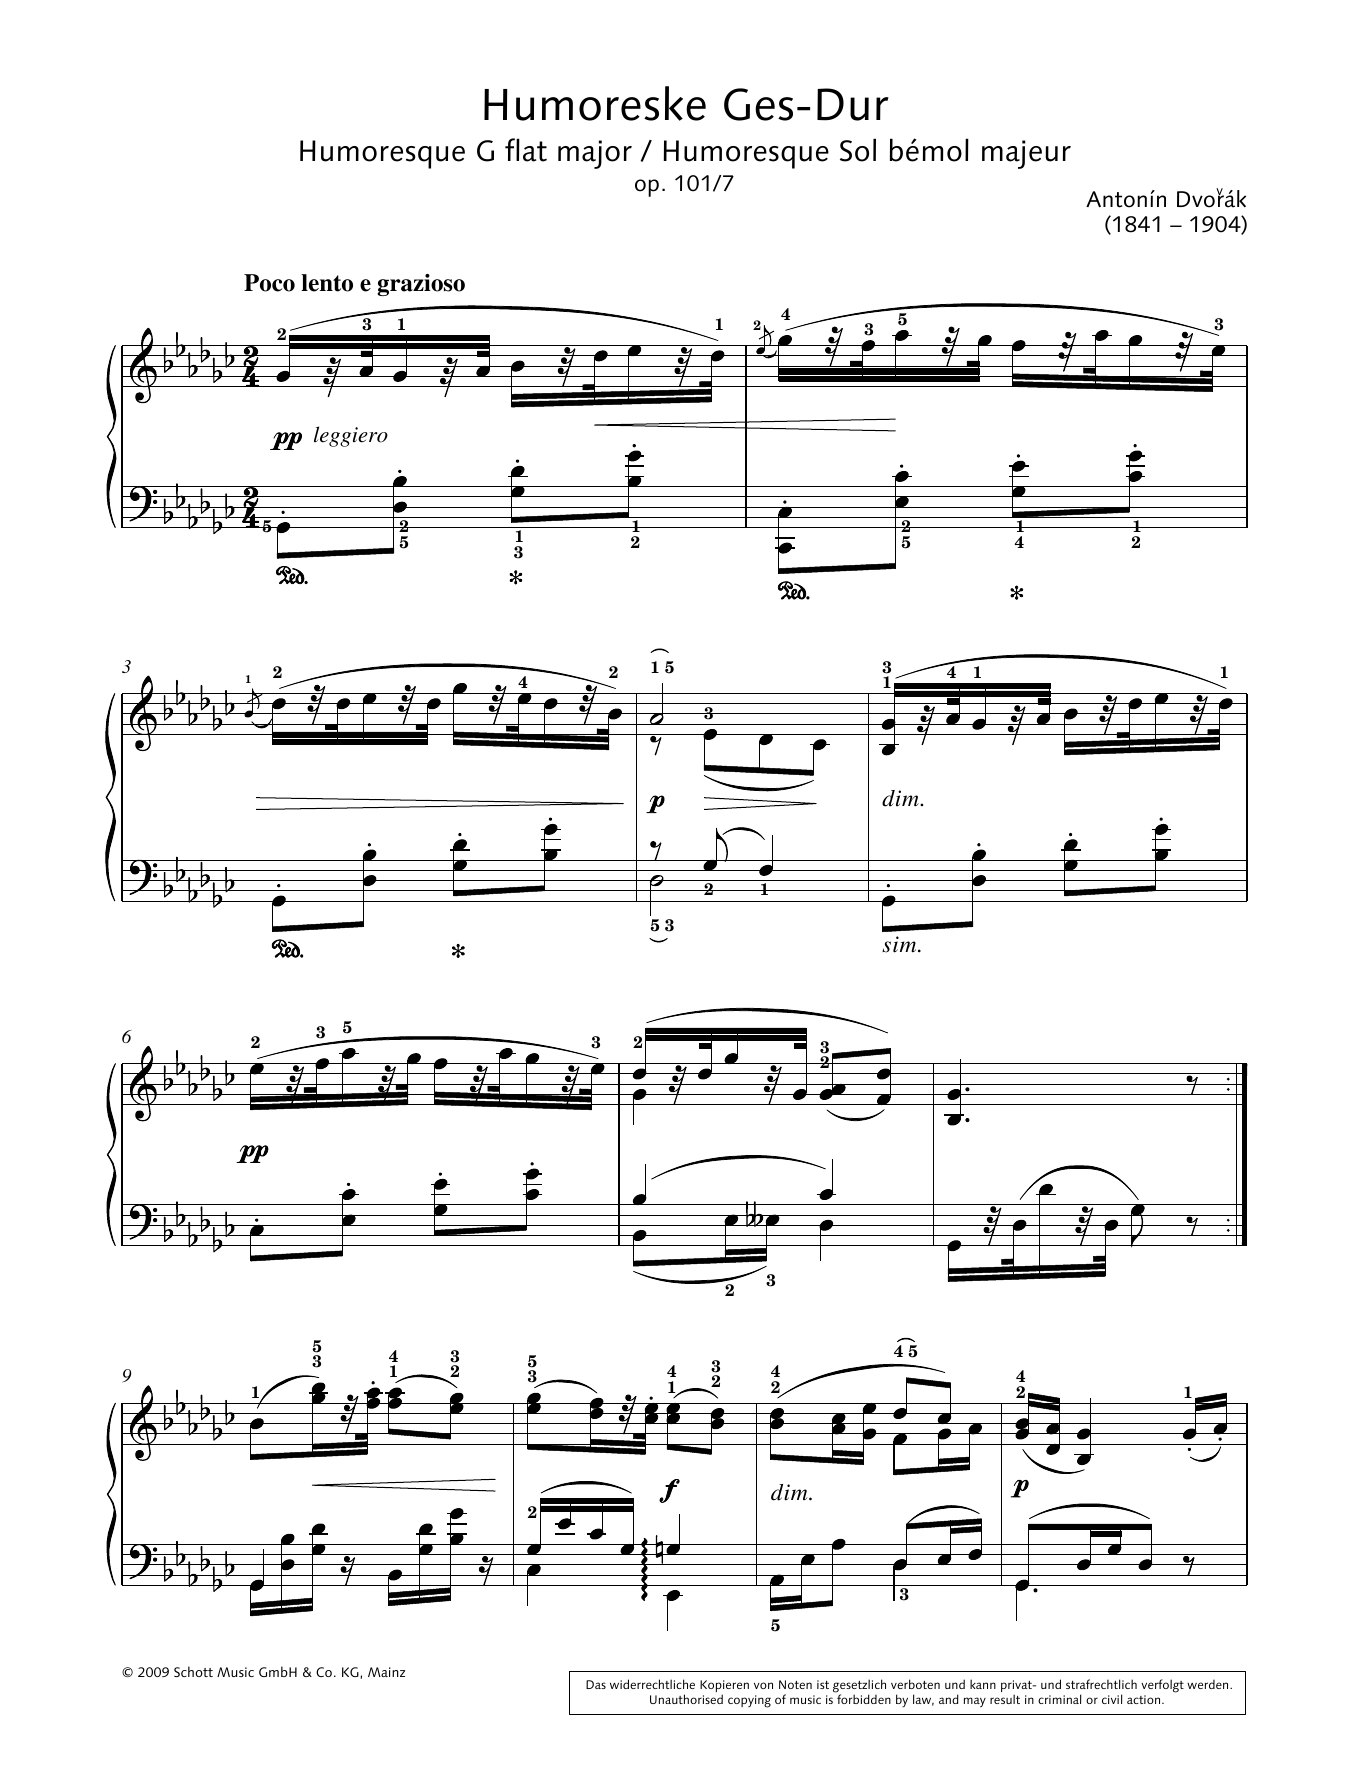 Hans-Gunter Heumann Humoresque G-flat major Sheet Music Notes & Chords for Piano Solo - Download or Print PDF